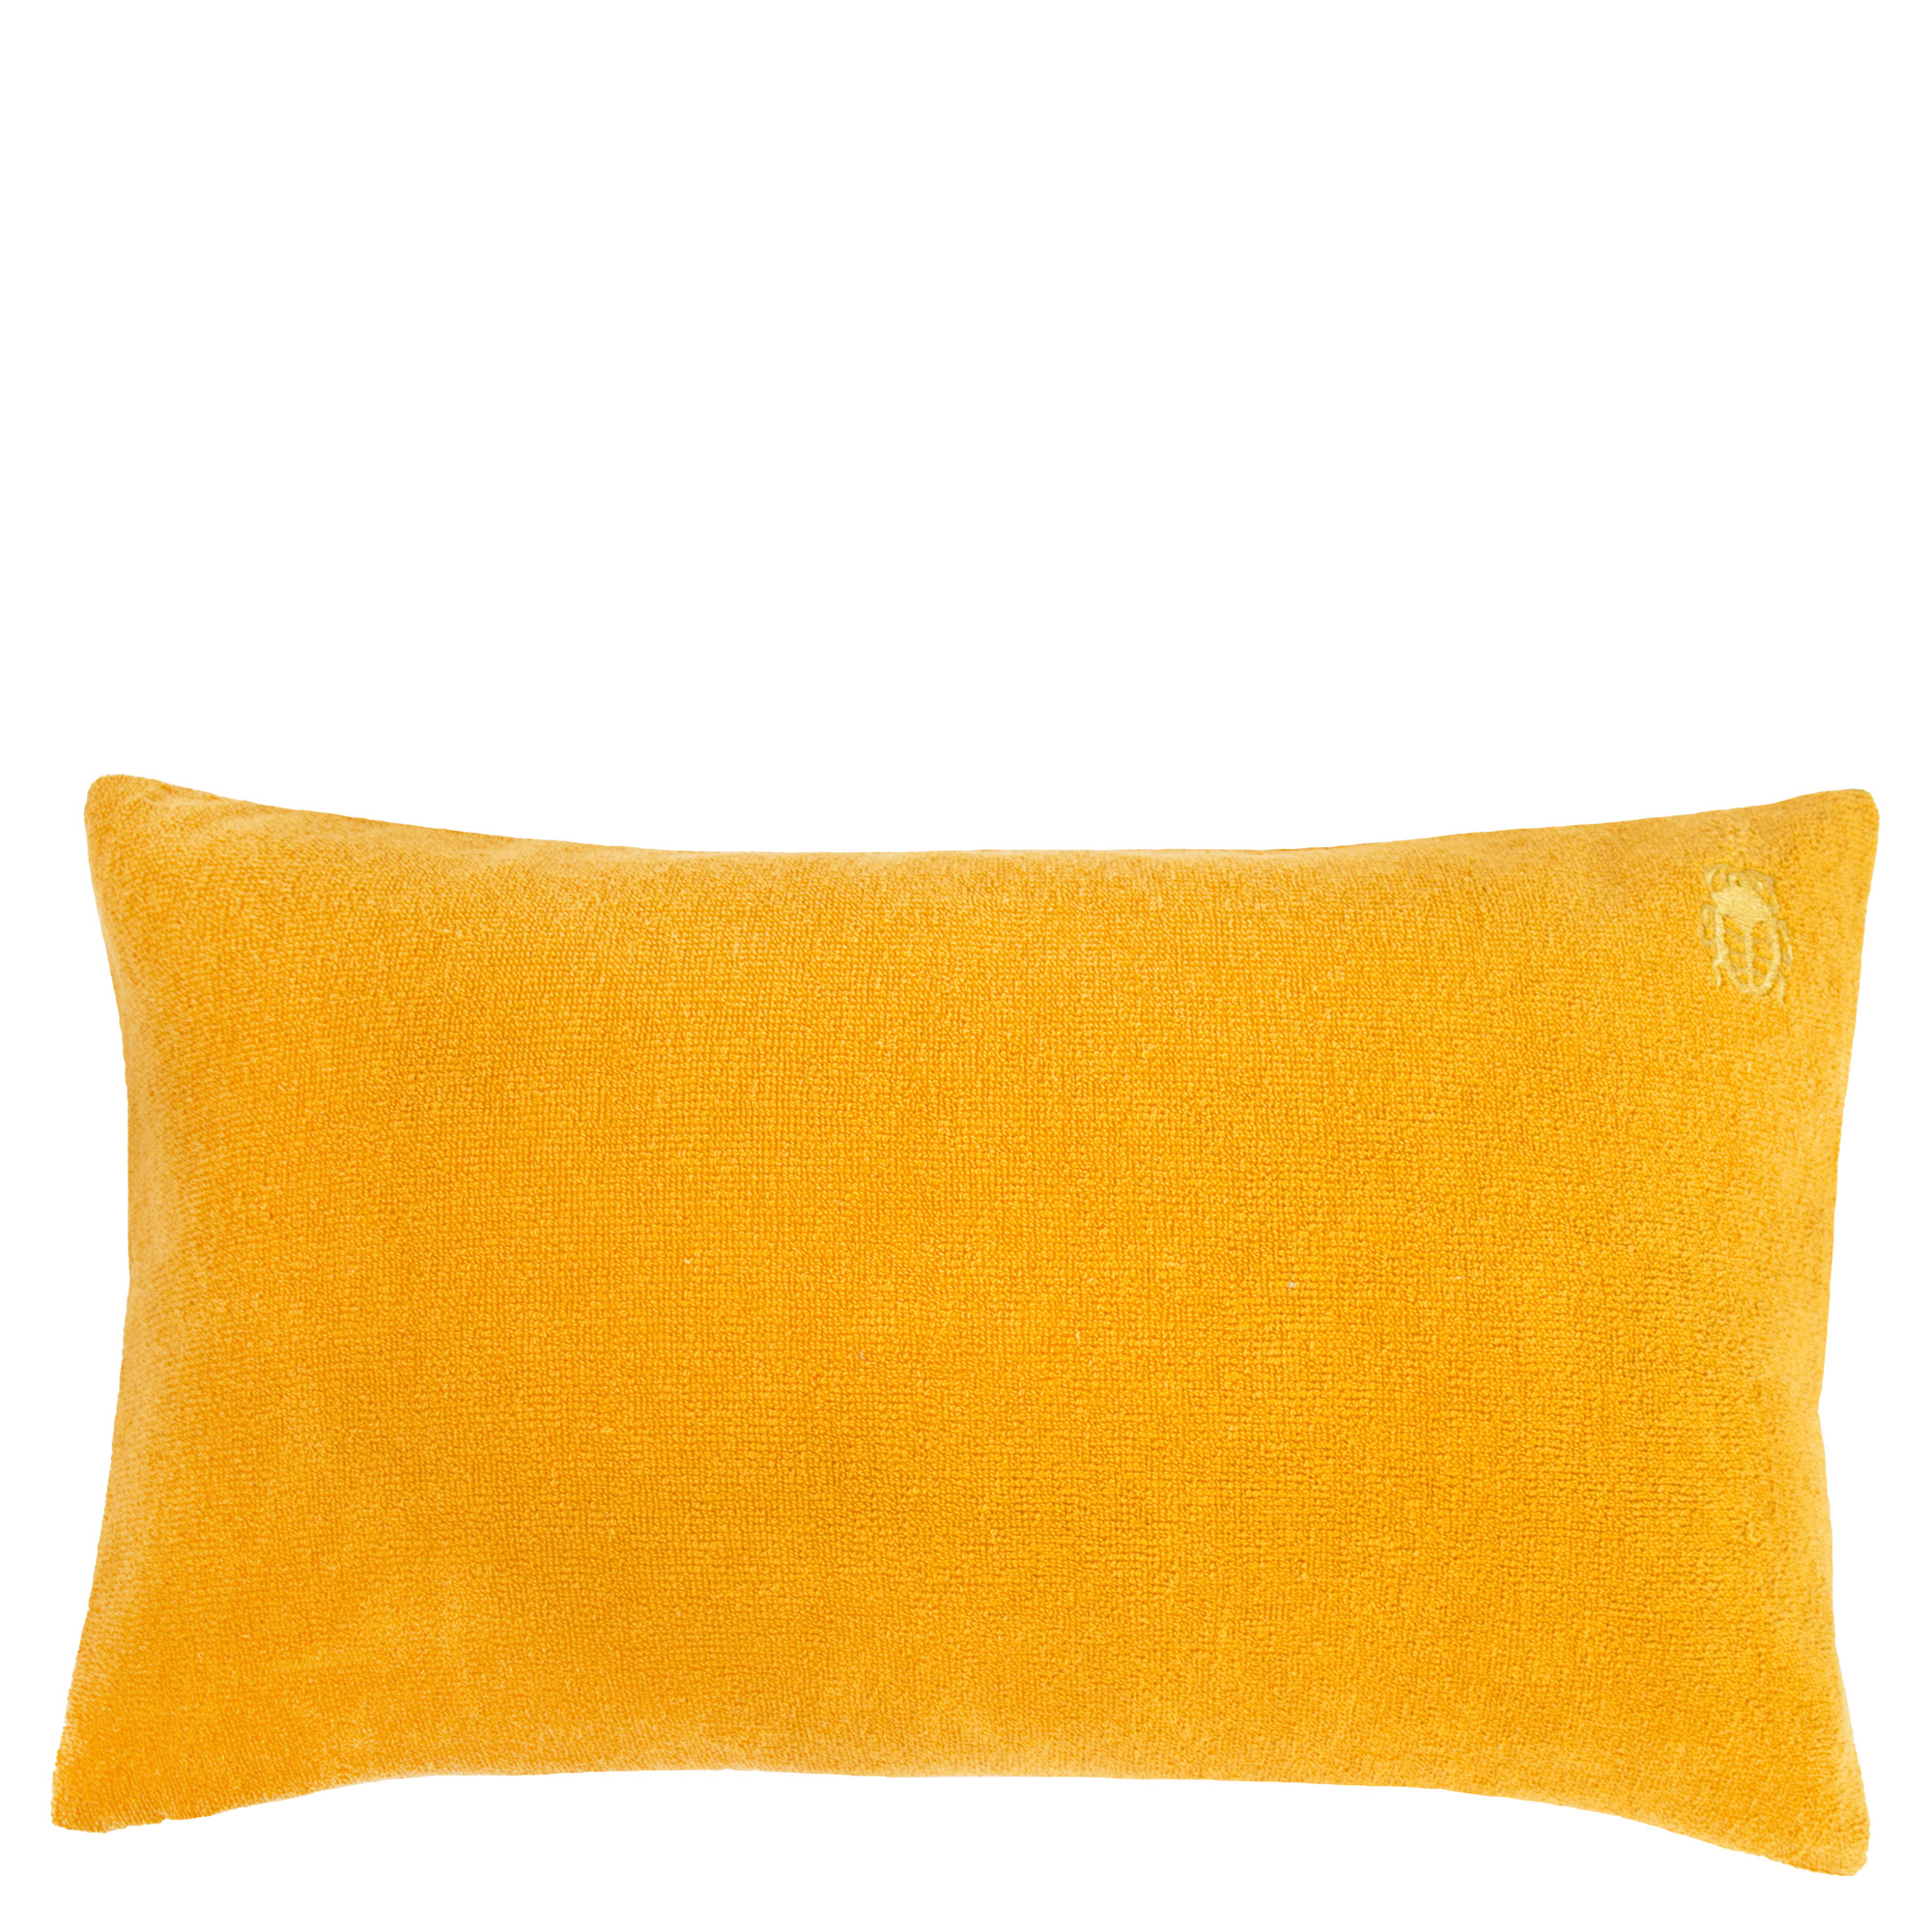 Kissenbezug 30x50 gelb aus Baumwolle, zoeppritz Spot 